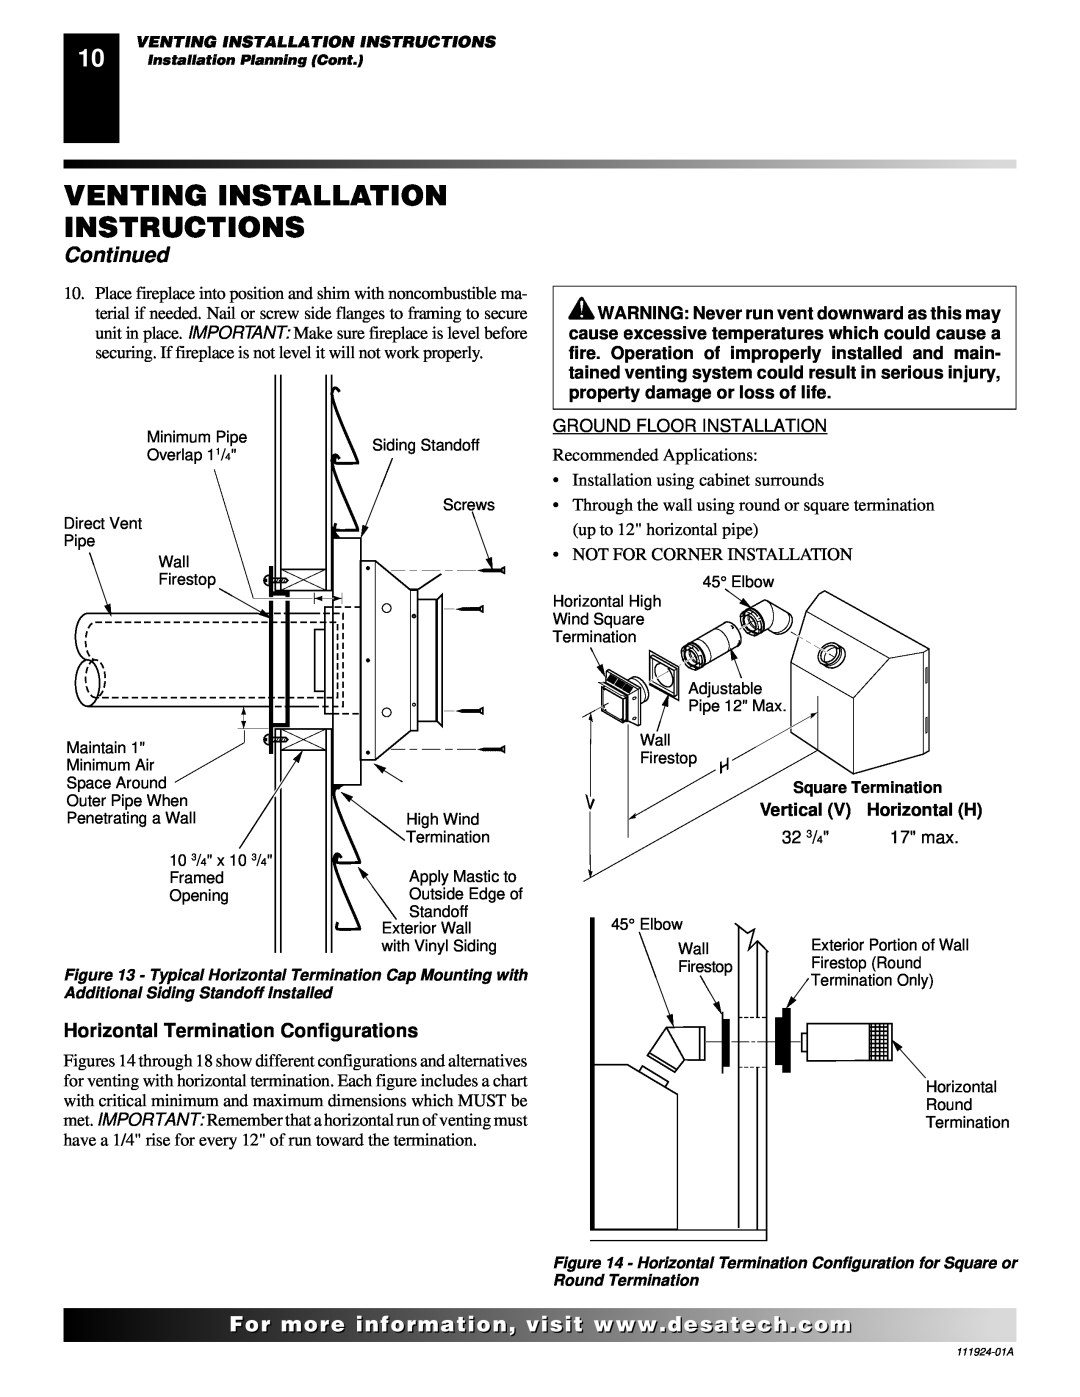 Desa K36EP, K36EN installation manual Venting Installation Instructions, Continued, Horizontal Termination Configurations 